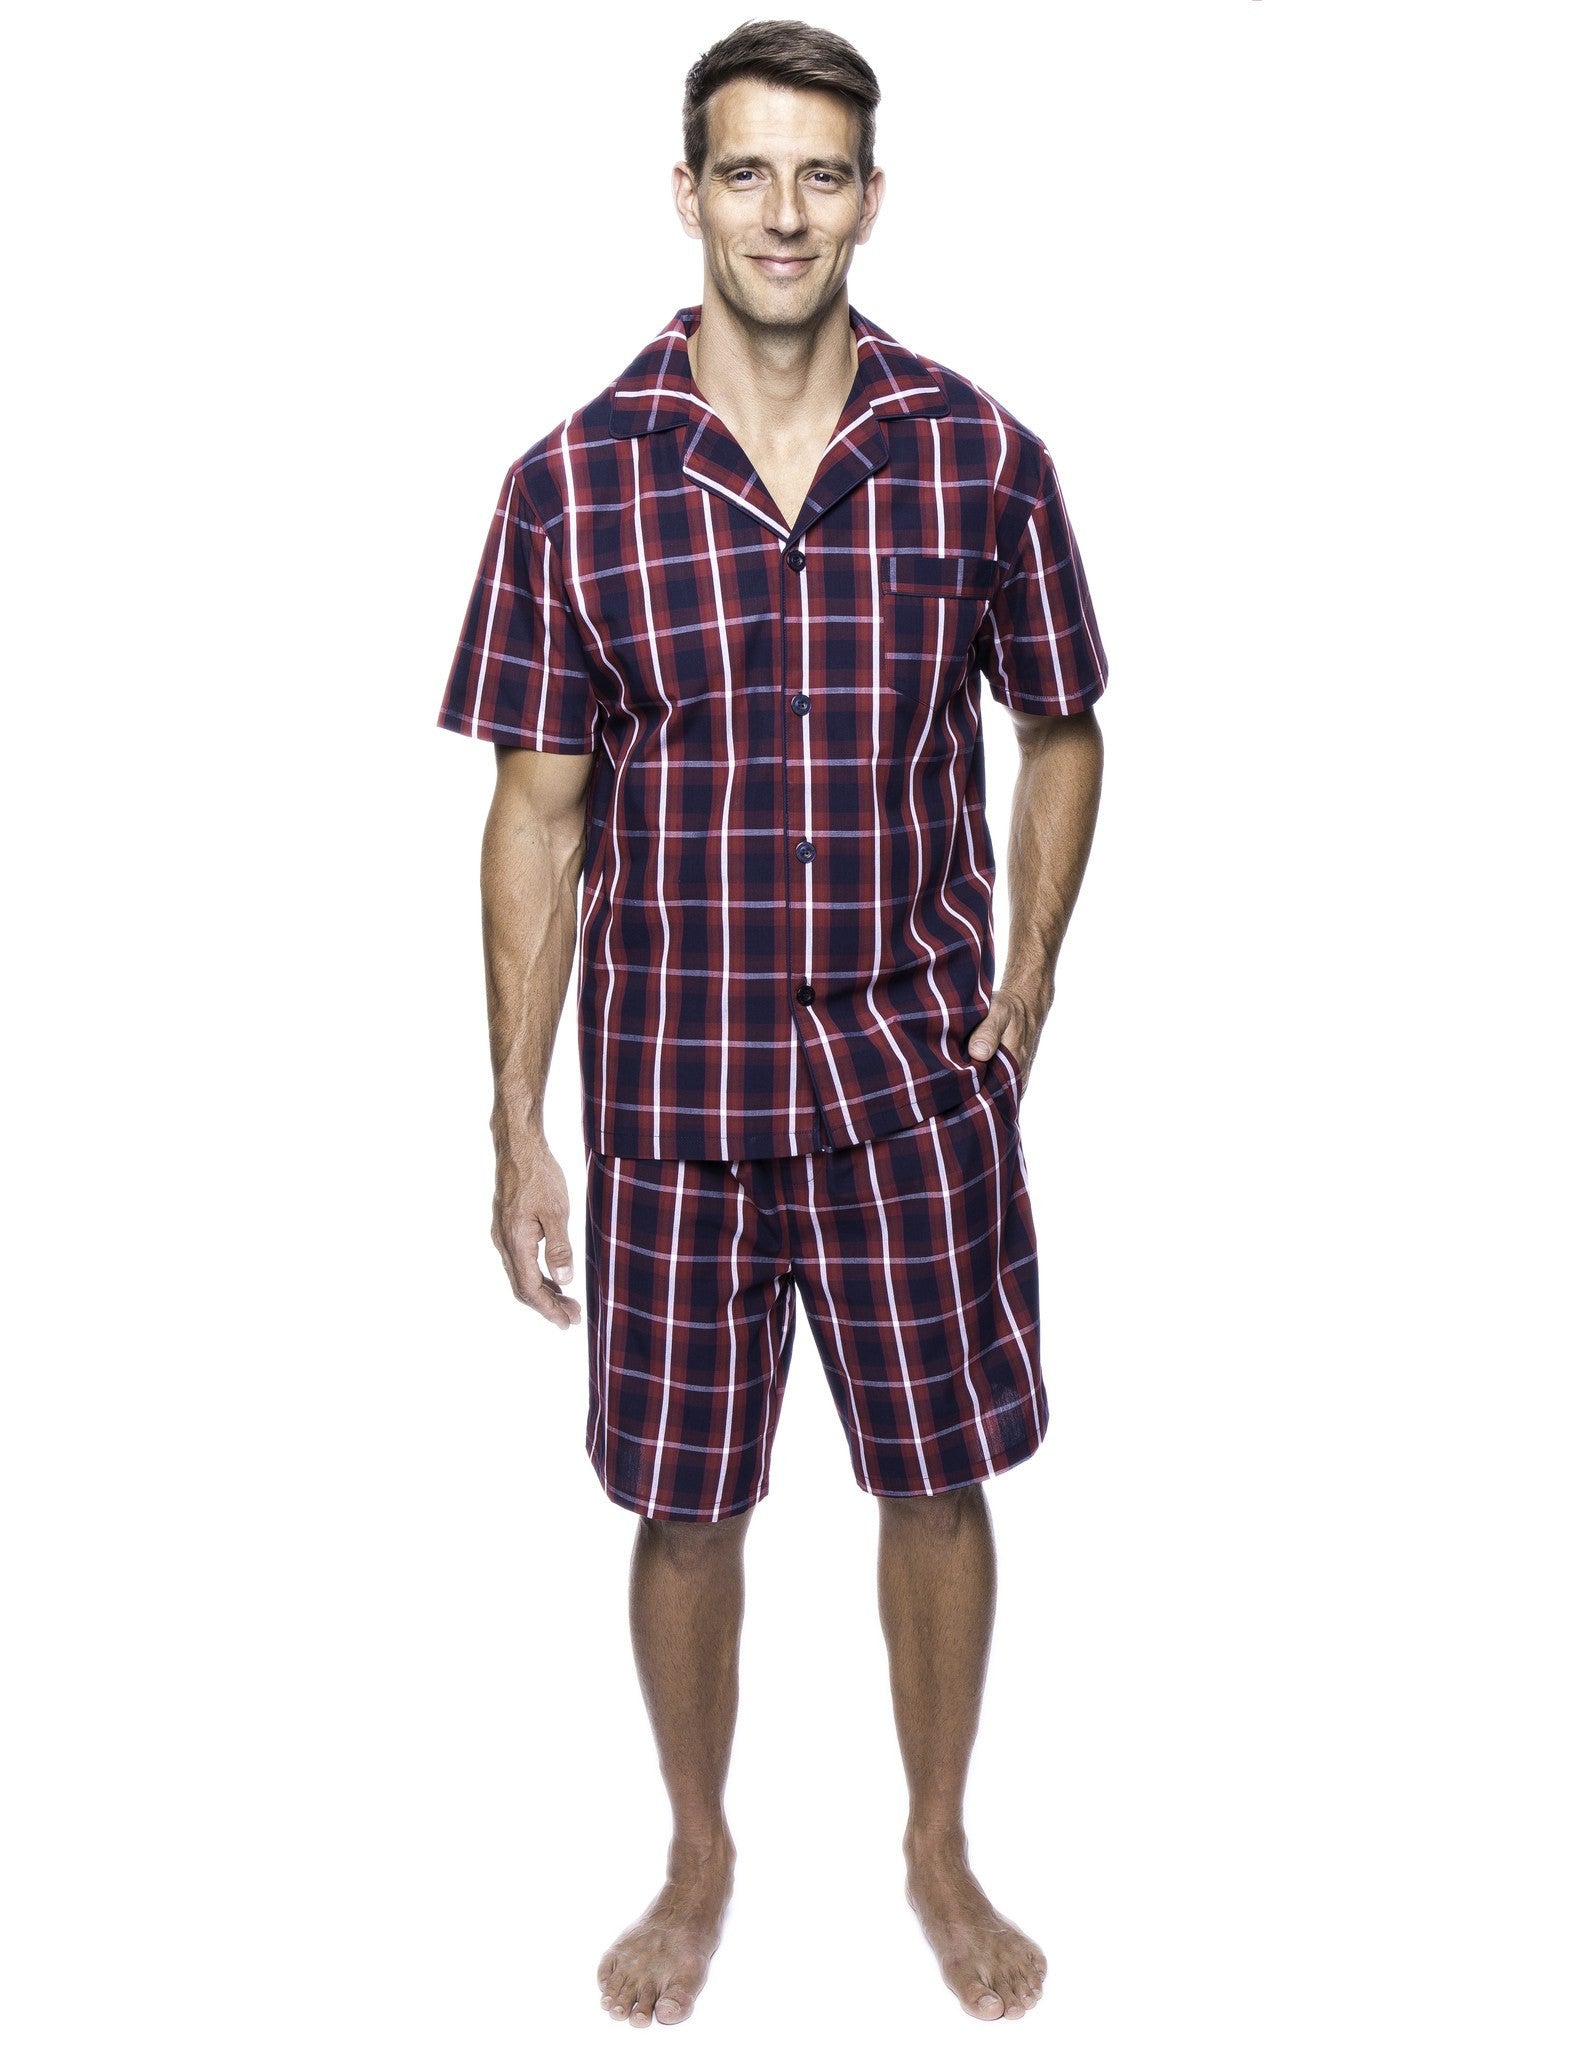 Twin Boat Men's 100% Woven Cotton Short Pajama Sleepwear Set